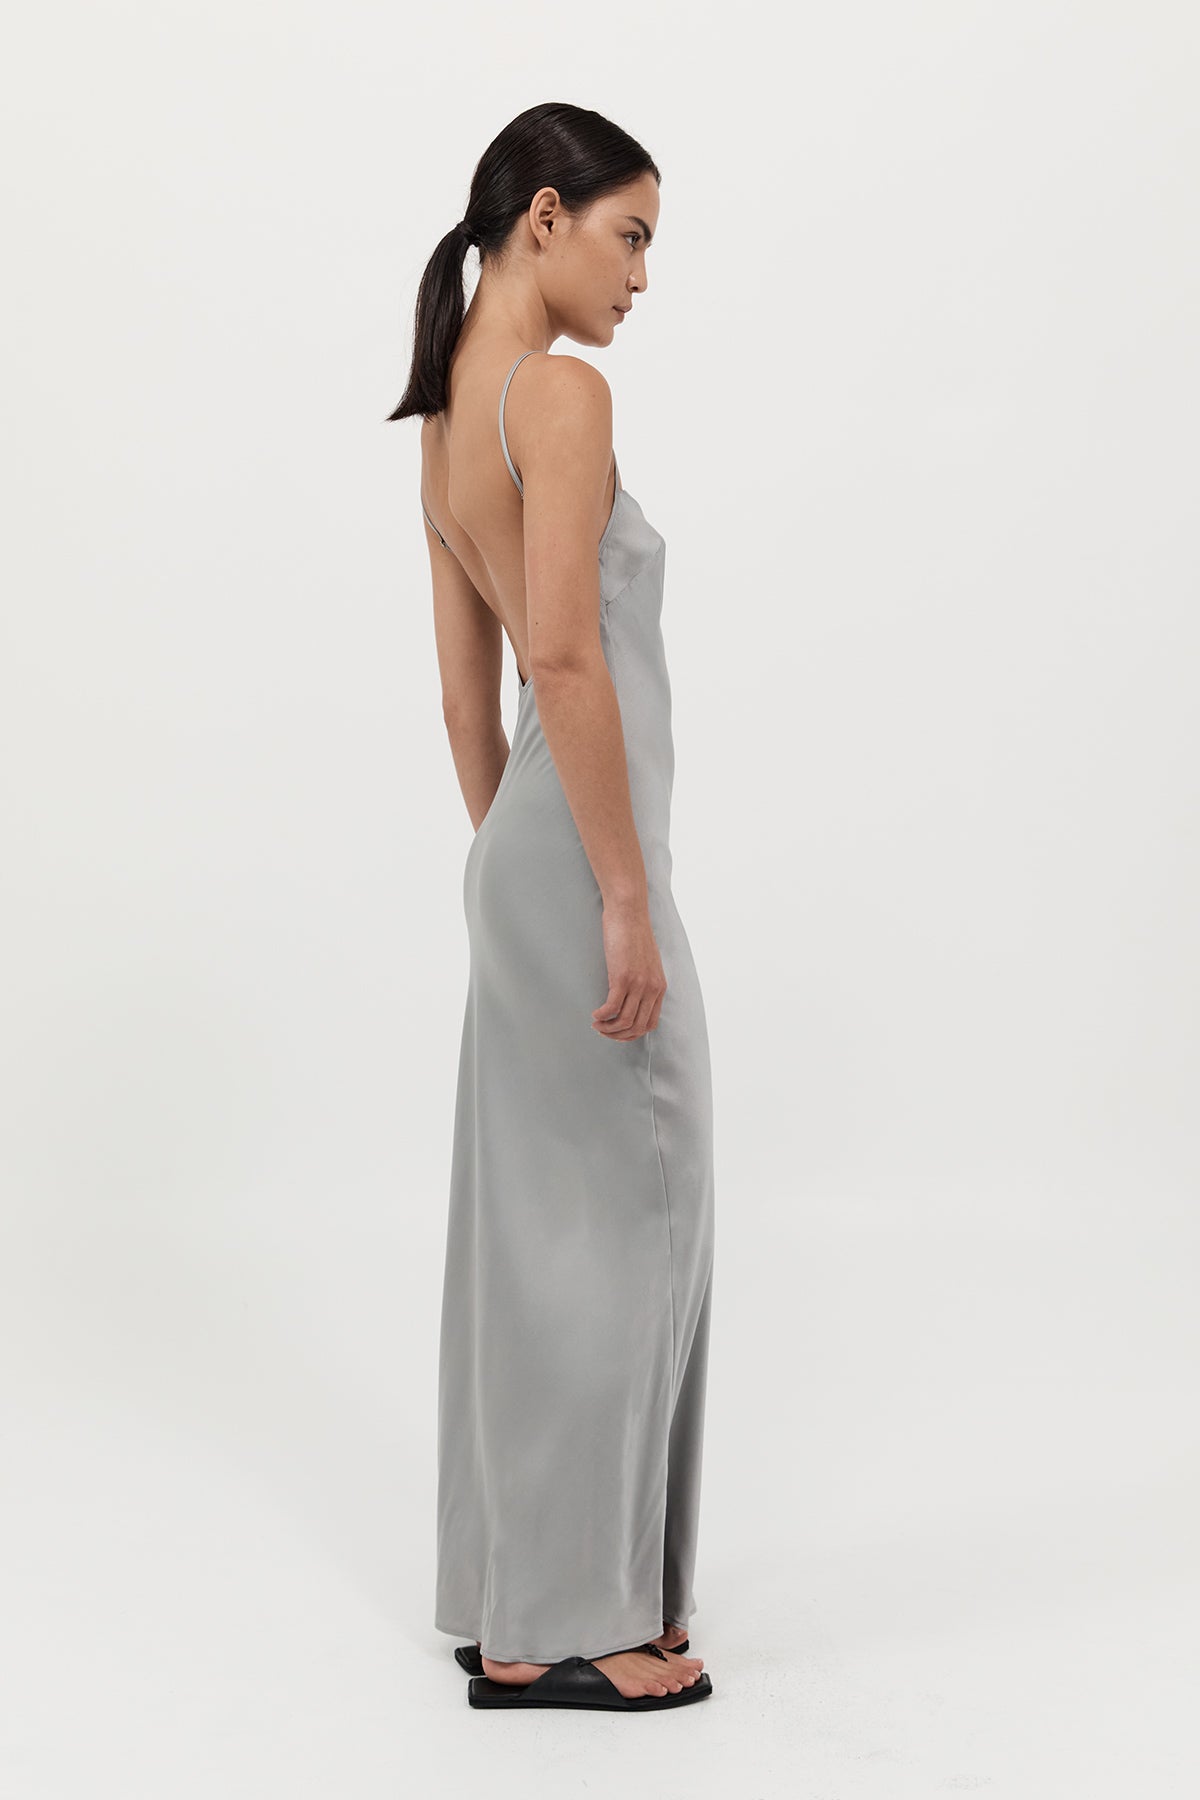 St. Agni | Low Back Slip Dress - Silver